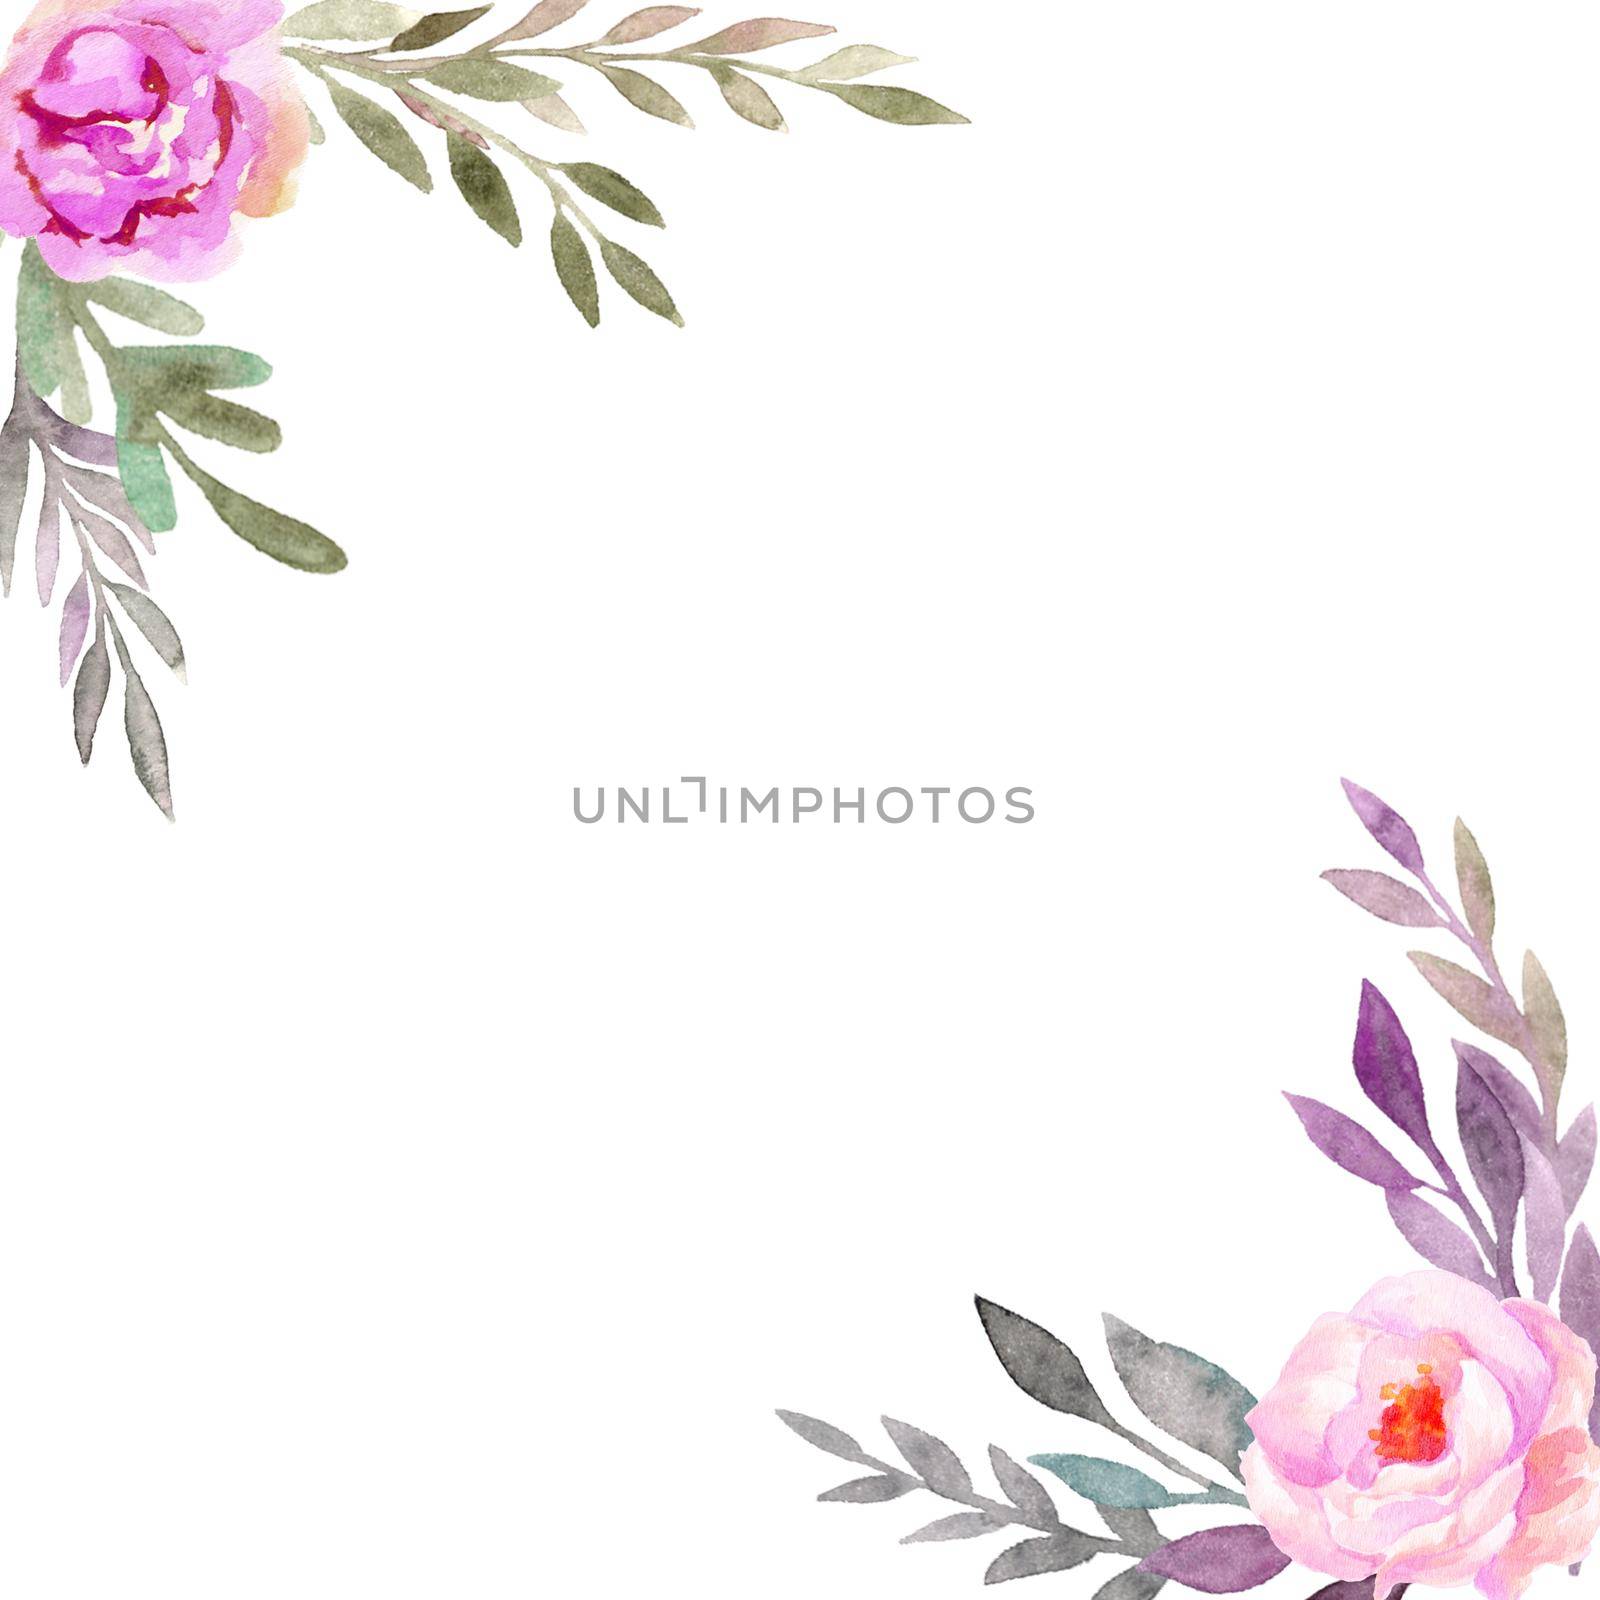 watercolor flower frame backgrounds. wreath of flowers in watercolor style with white background, illustration